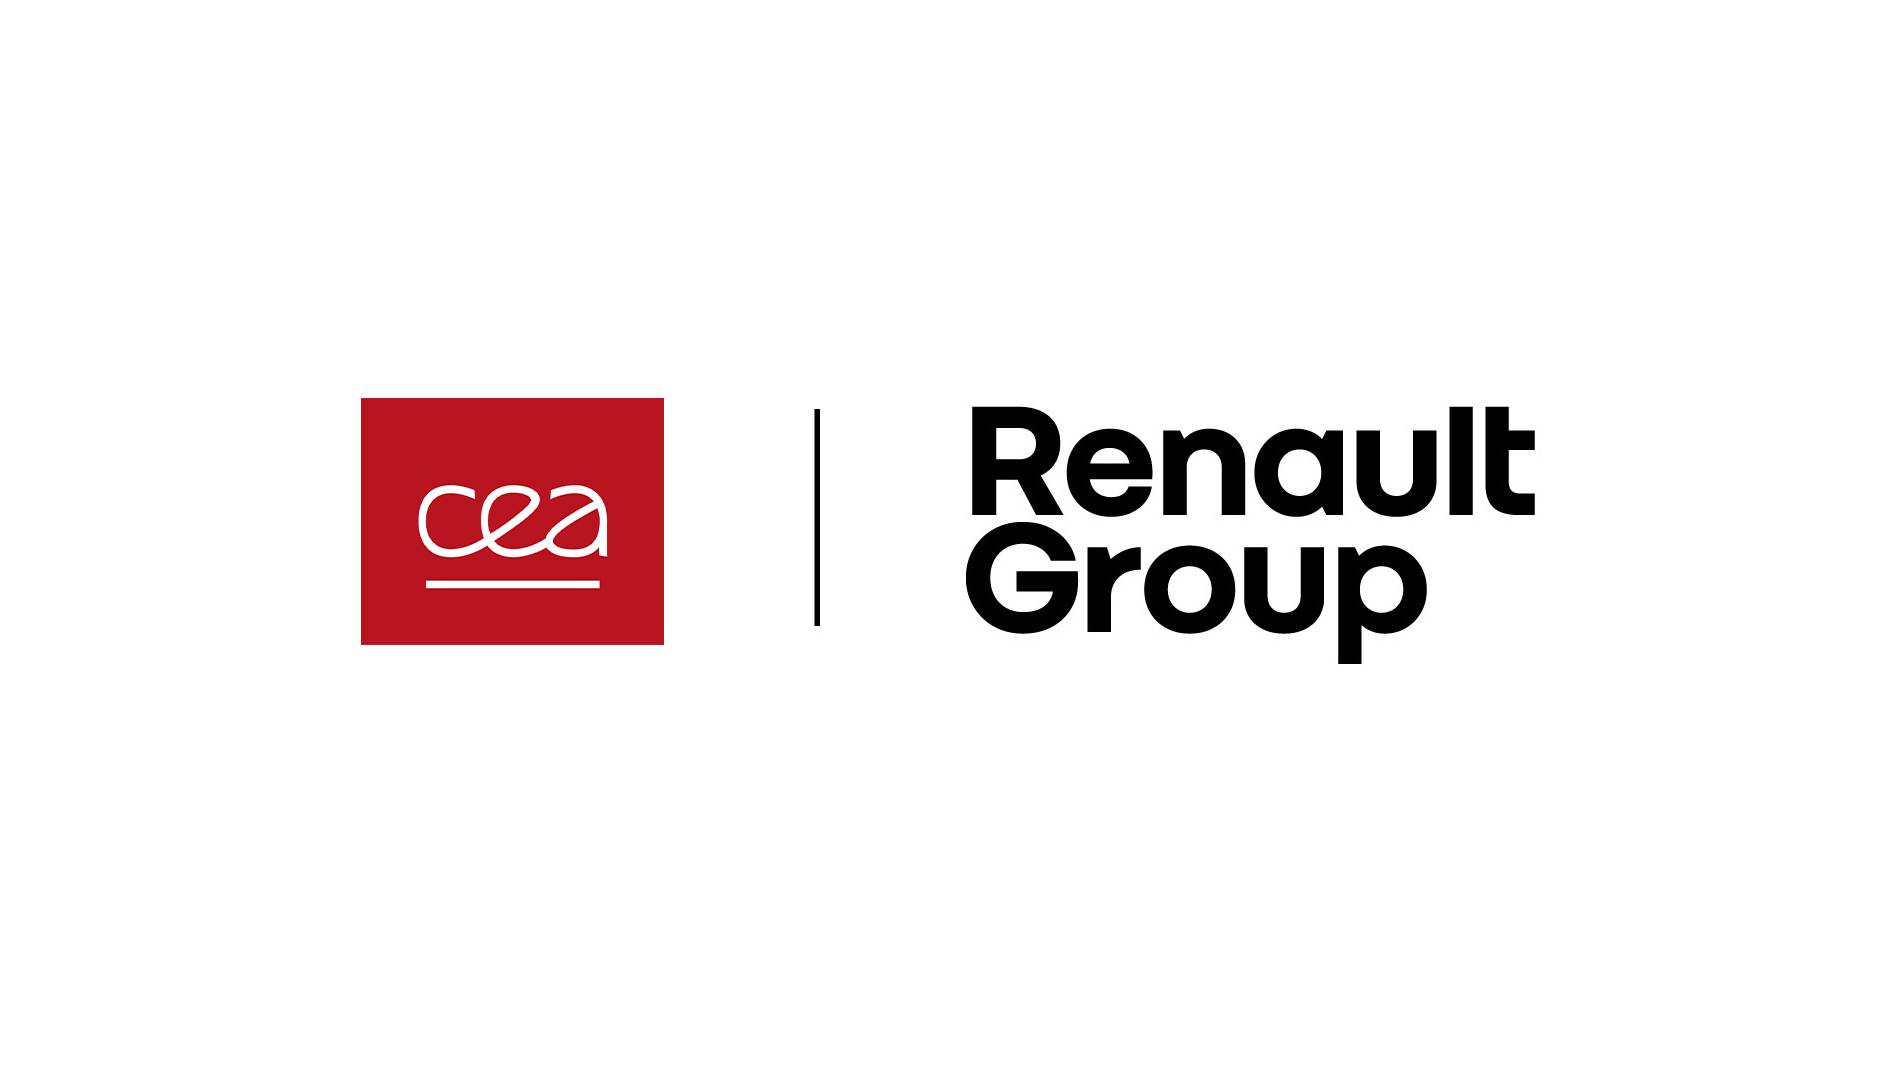 Tο Renault Group και η CEA εξελίσσουν νέο ενσωματωμένο αμφίδρομο φορτιστή